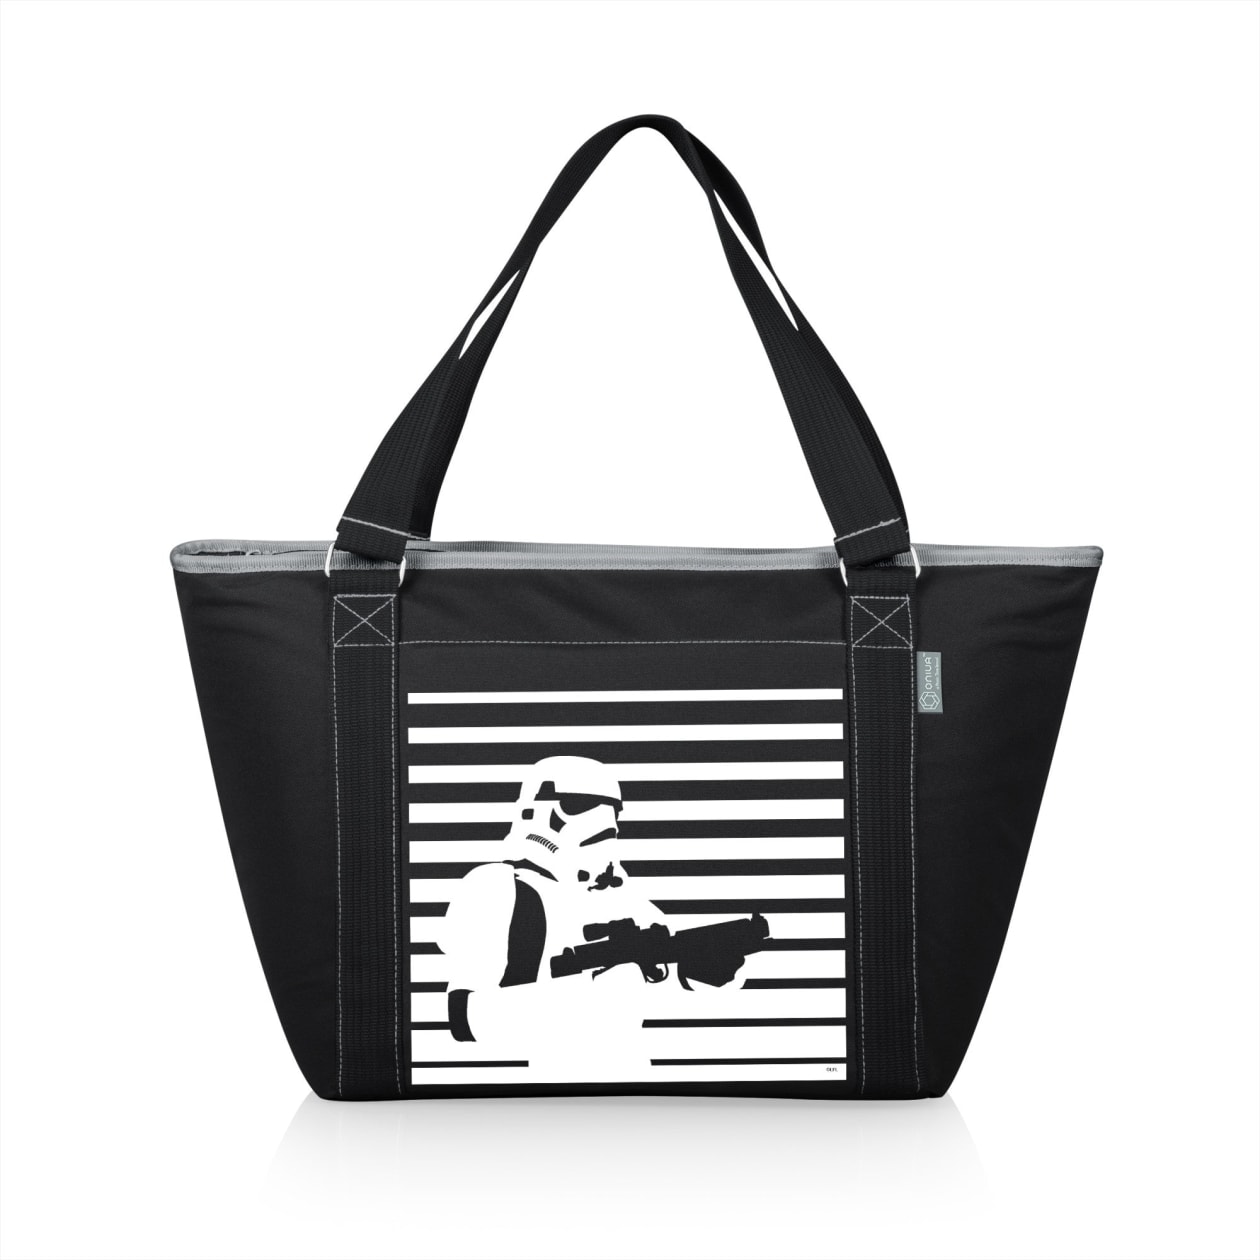 Star Wars Storm Trooper - Topanga Cooler Tote Bag - Color: Black